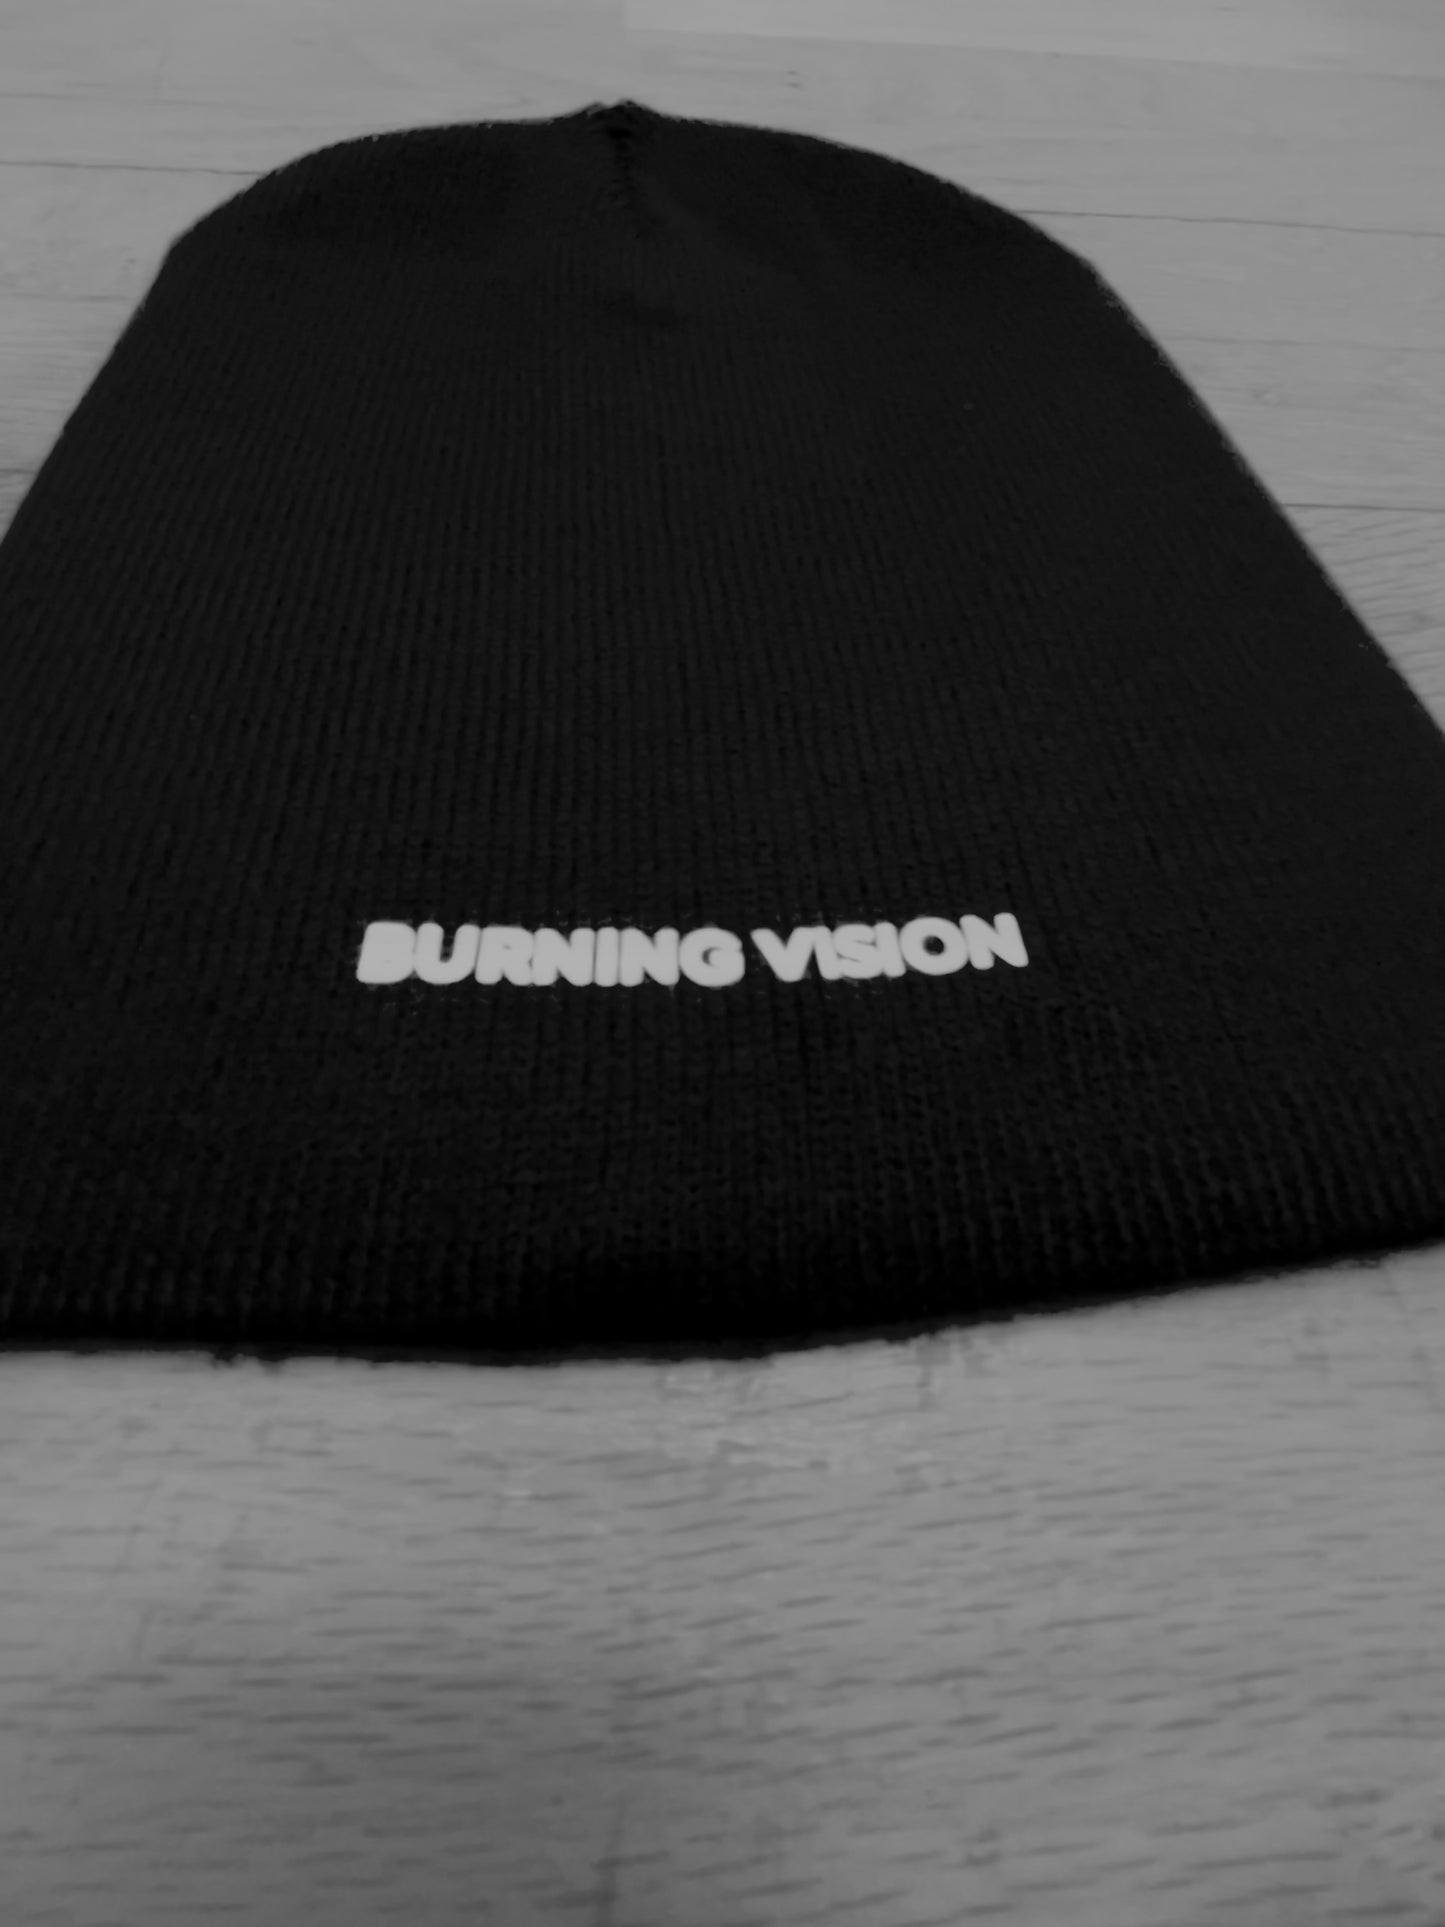 “BURNING VISION” LETTERING BEANIE